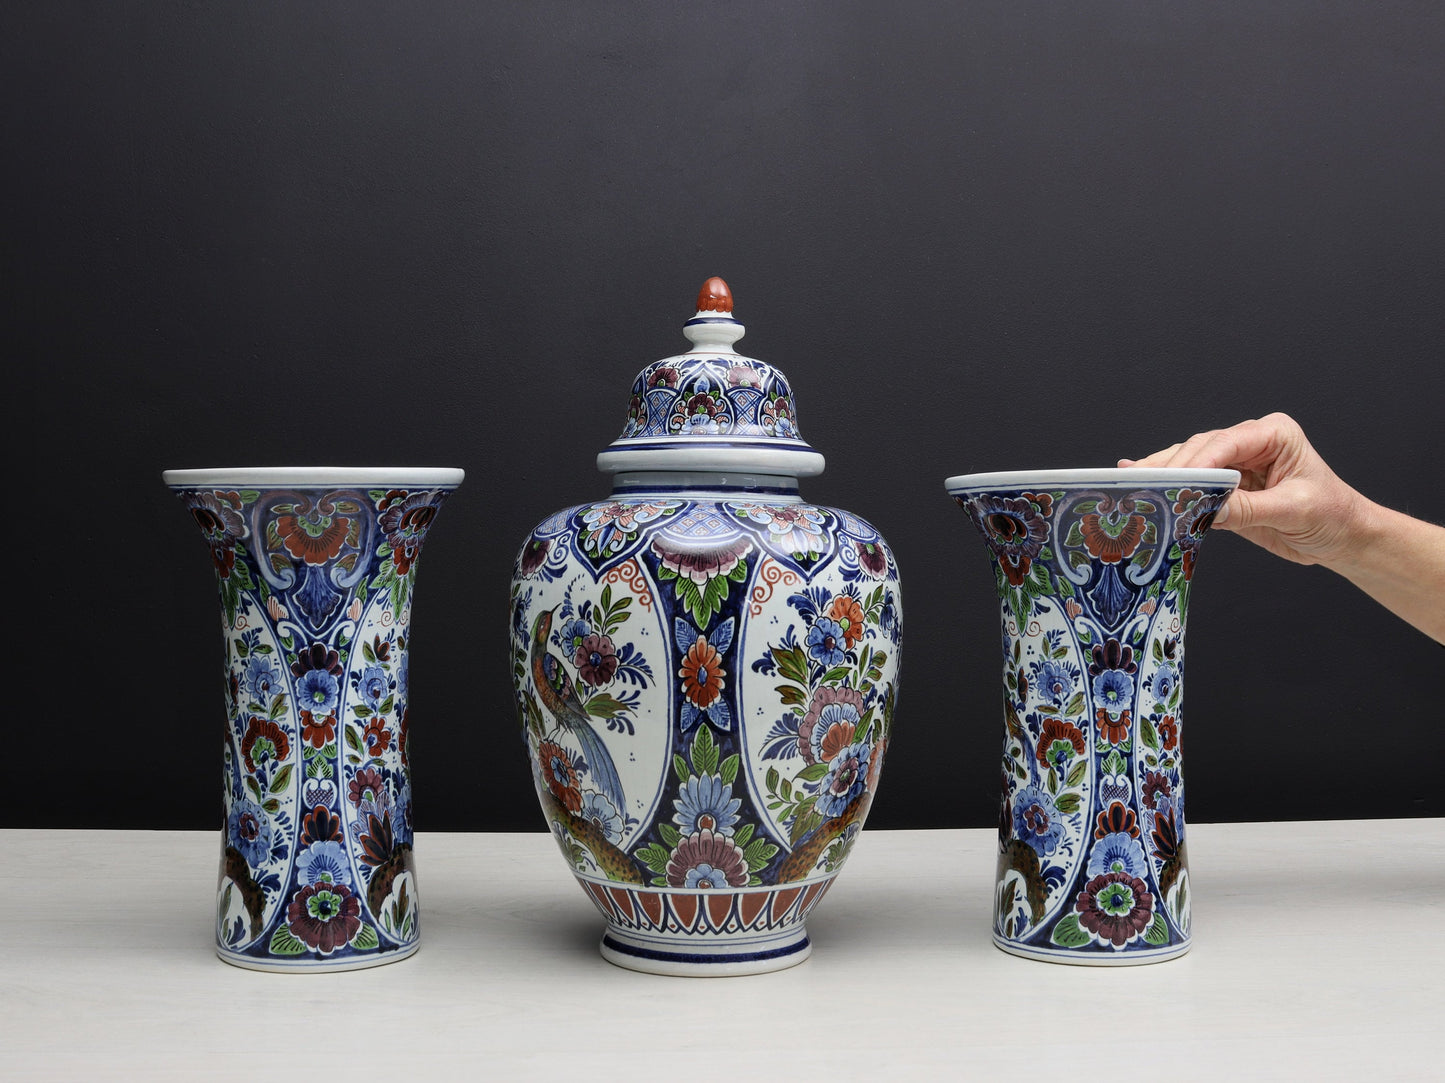 Unique Deft Pottery Ceramic Vase Set in Rare Multi Colors | Decorative Delft Vase-Unique Gift Ideas